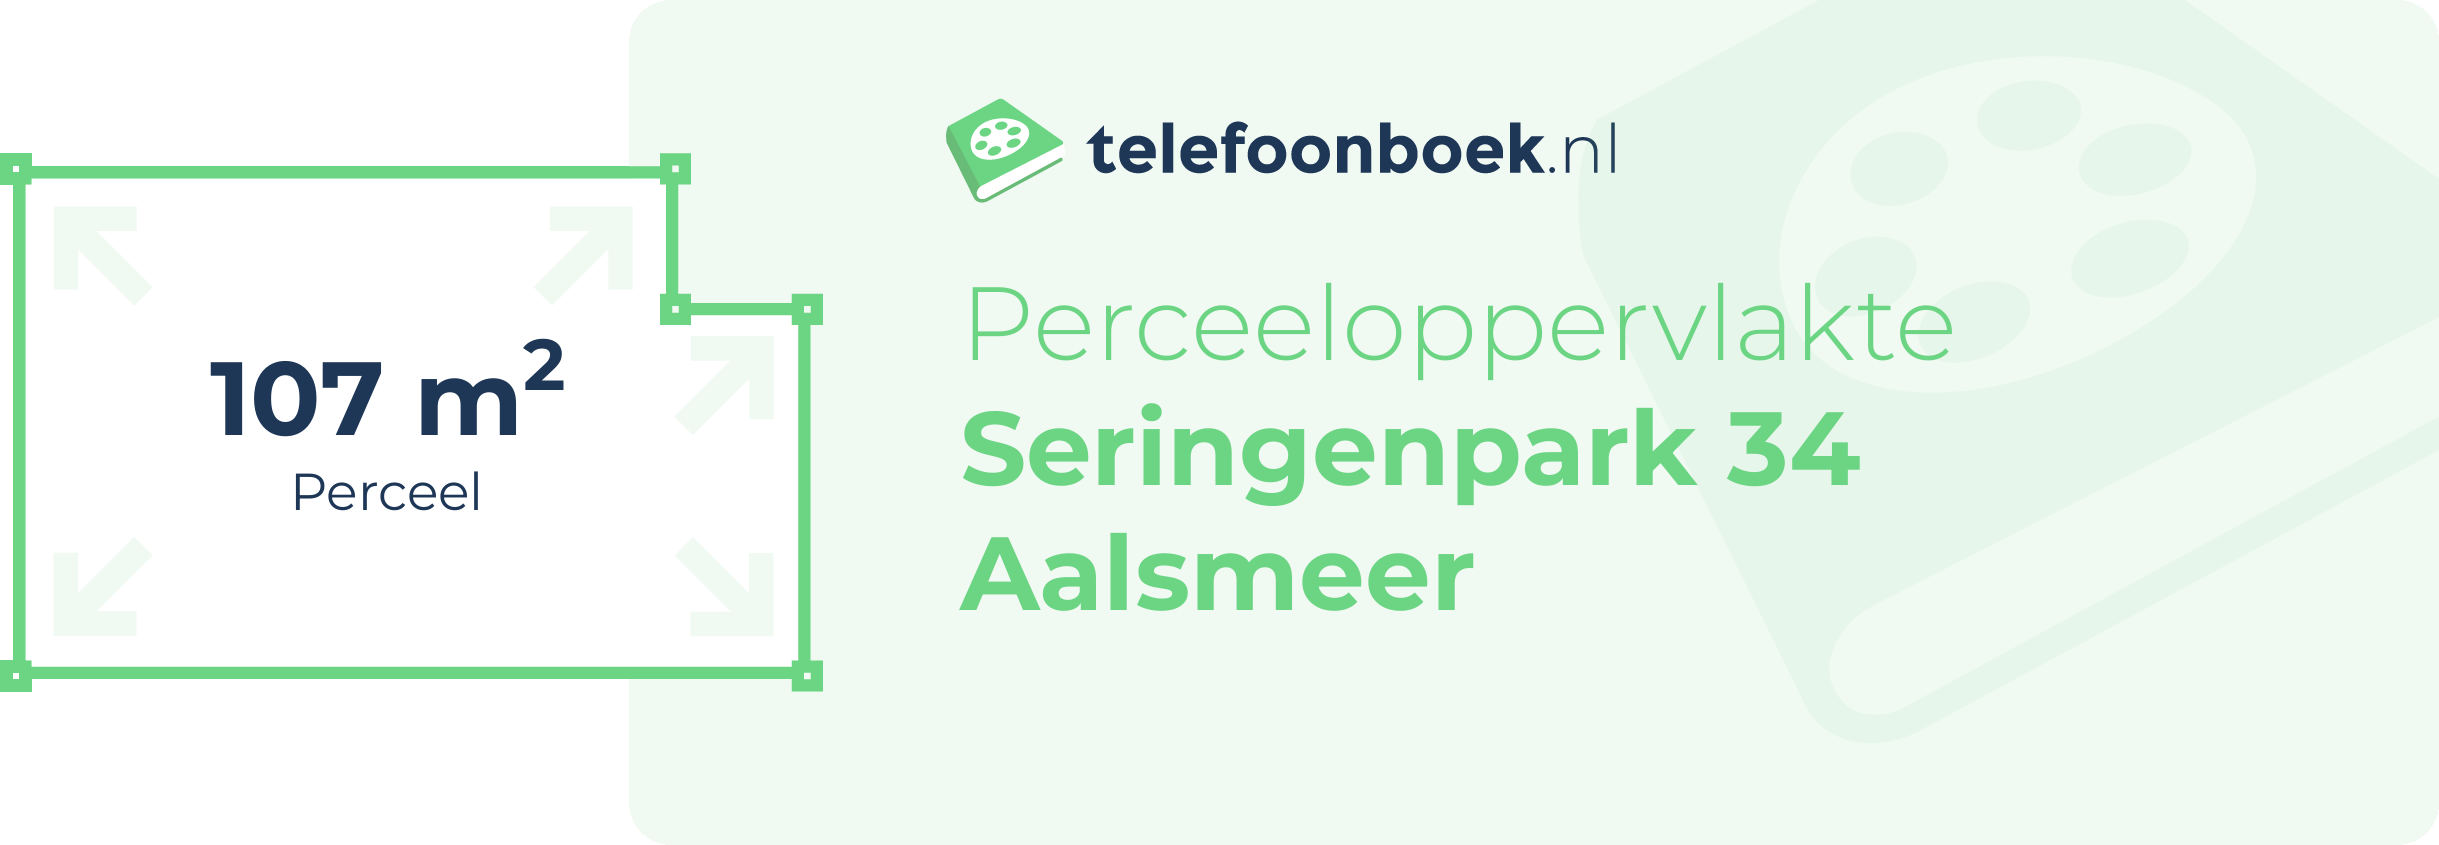 Perceeloppervlakte Seringenpark 34 Aalsmeer